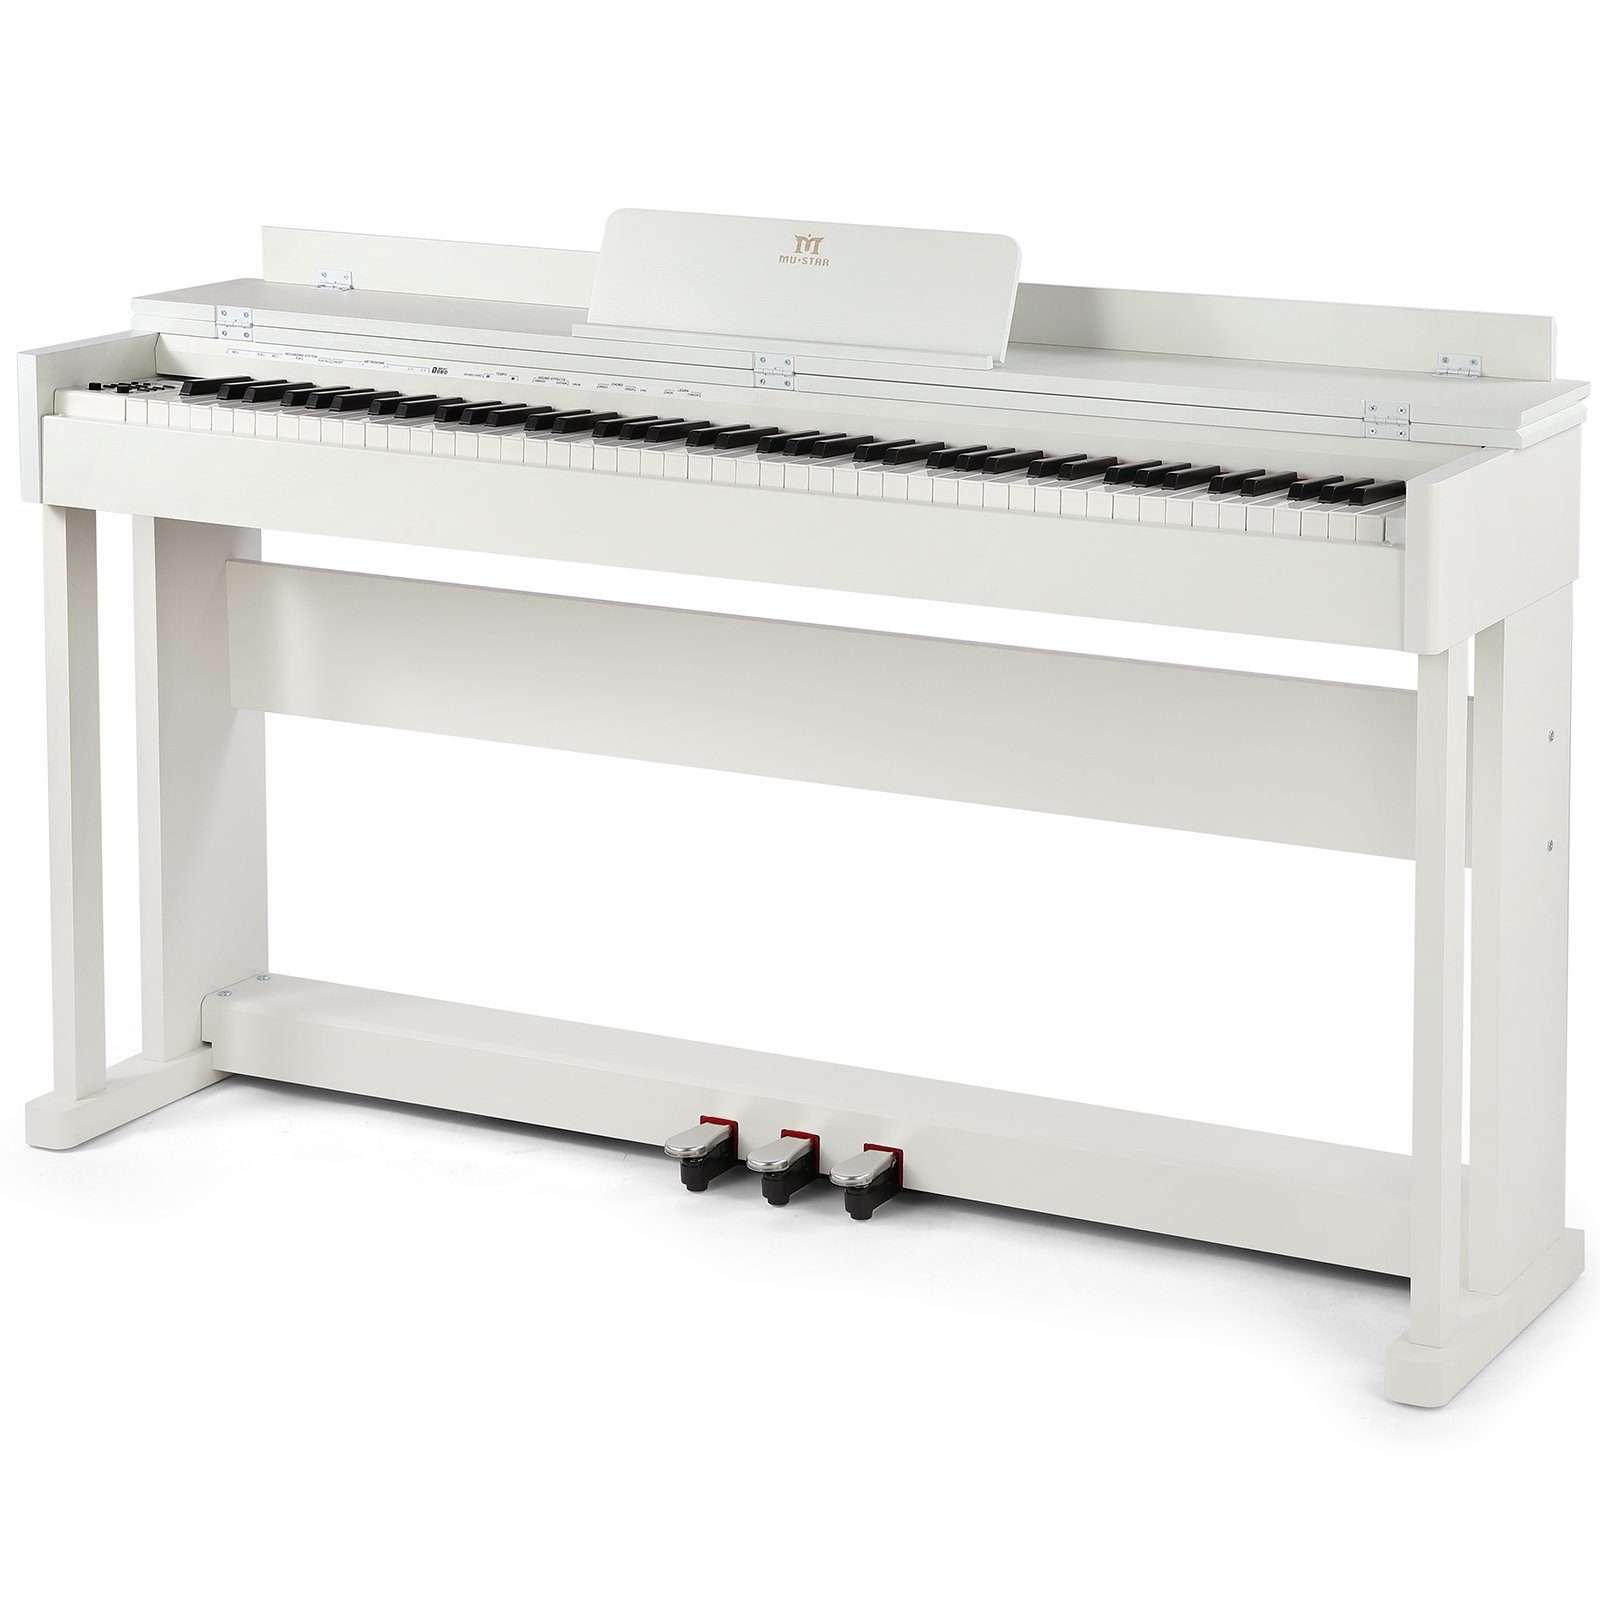 MUSTAR Digitalpiano E-Piano mit Hammermechanik,88 Tasten, 3 Pedale, Dual Kontrollsystem,USB/MIDI